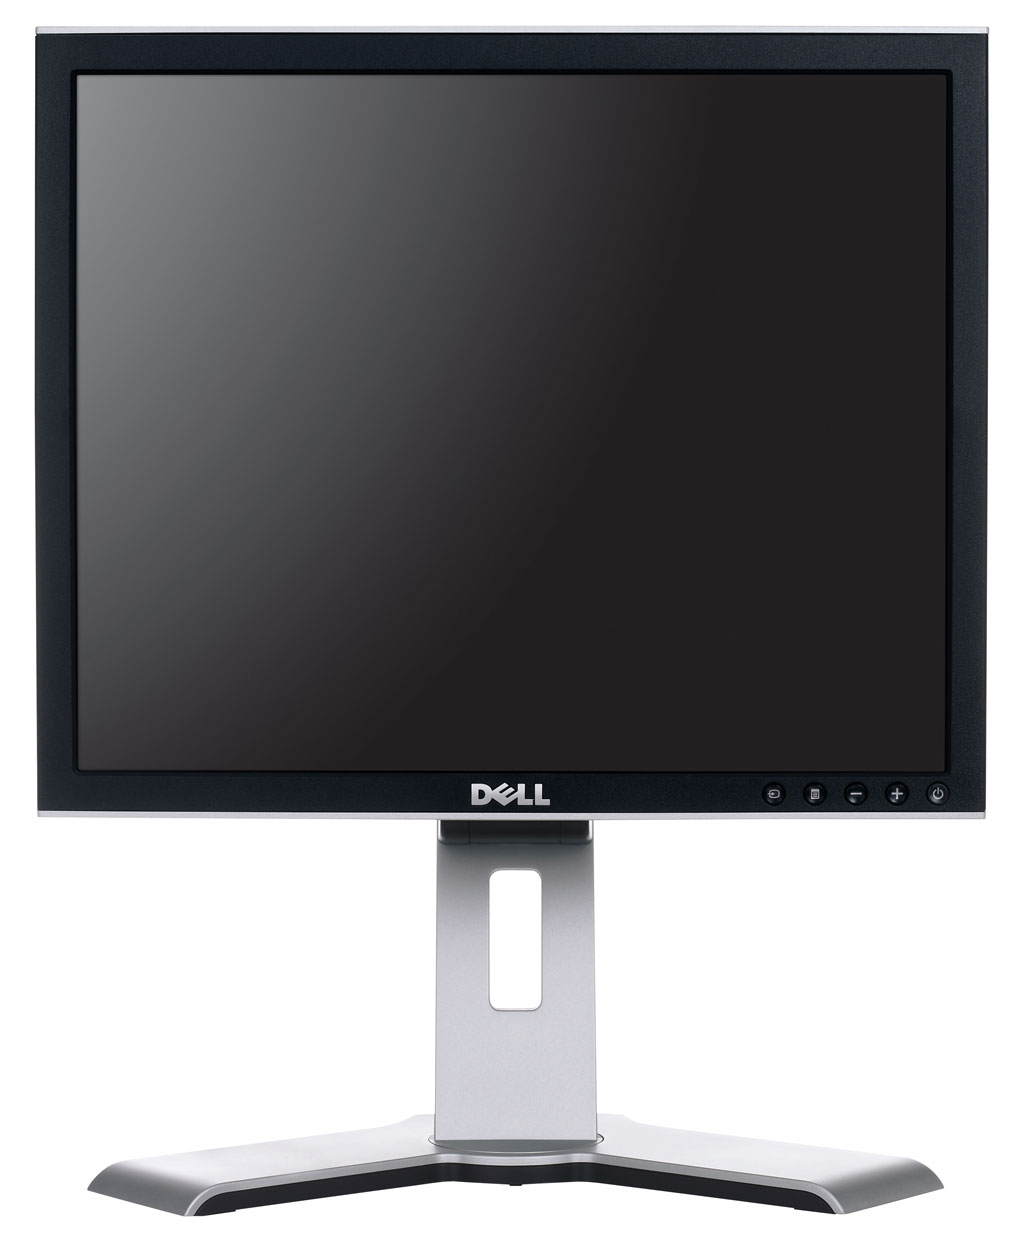 LAP TOP VALLEY: Dell LCD - Wallpaper